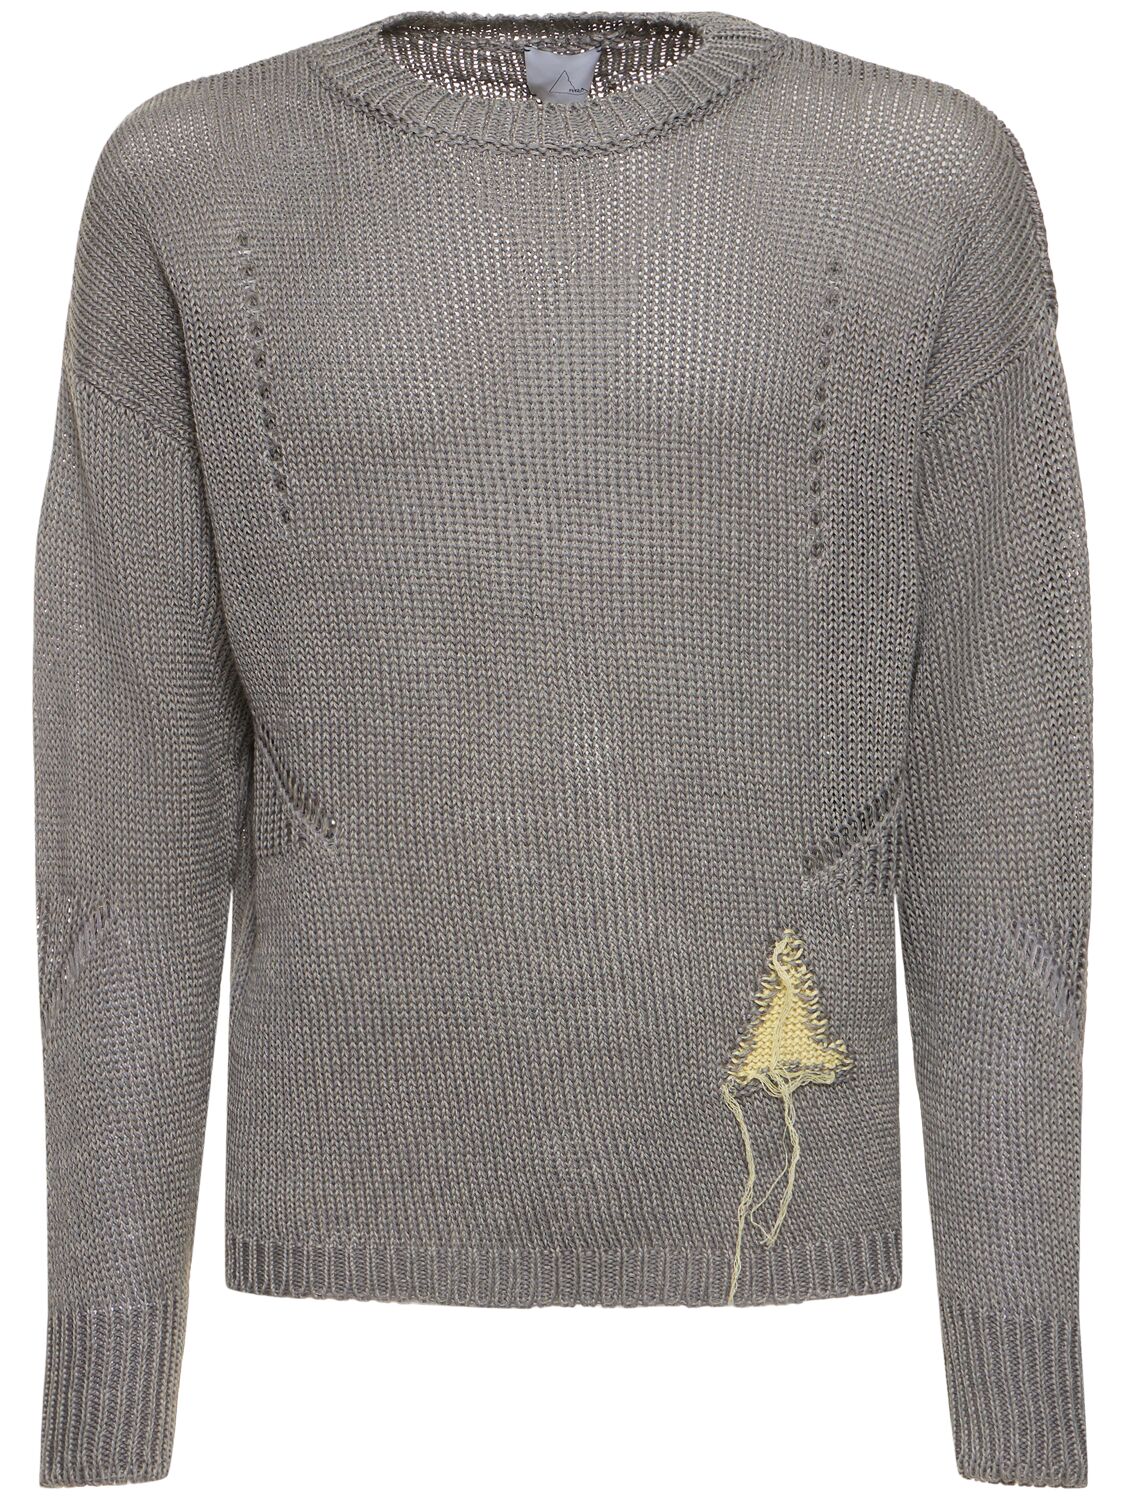 Image of Hemp & Cotton Crewneck Sweater